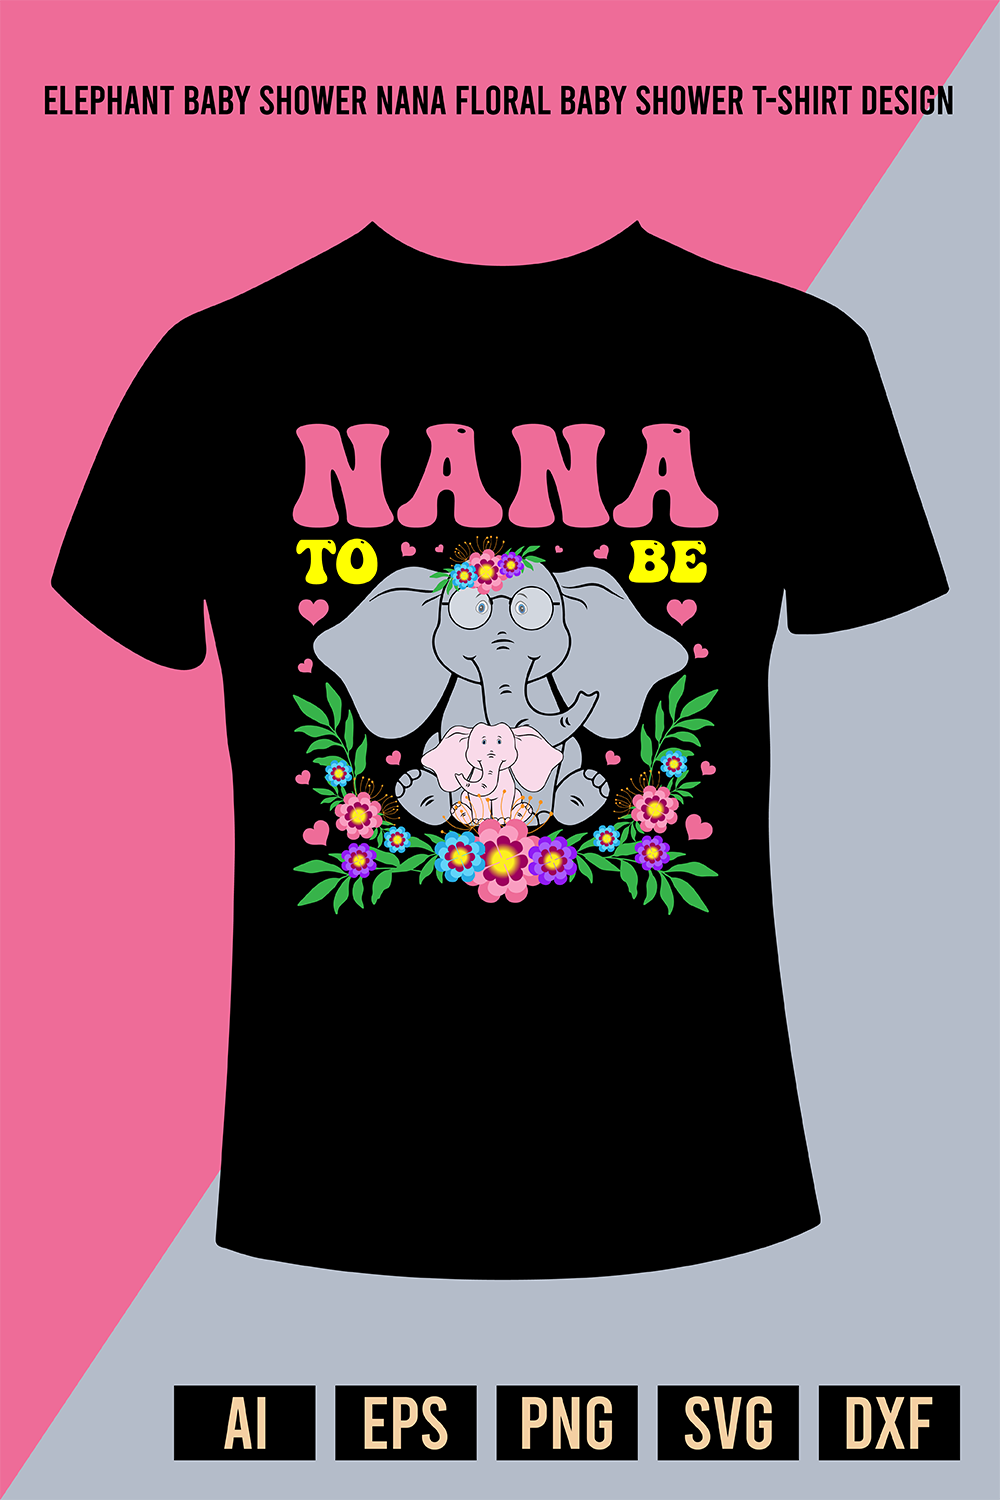 Elephant Baby Shower Nana Floral Baby Shower T-Shirt Design pinterest preview image.